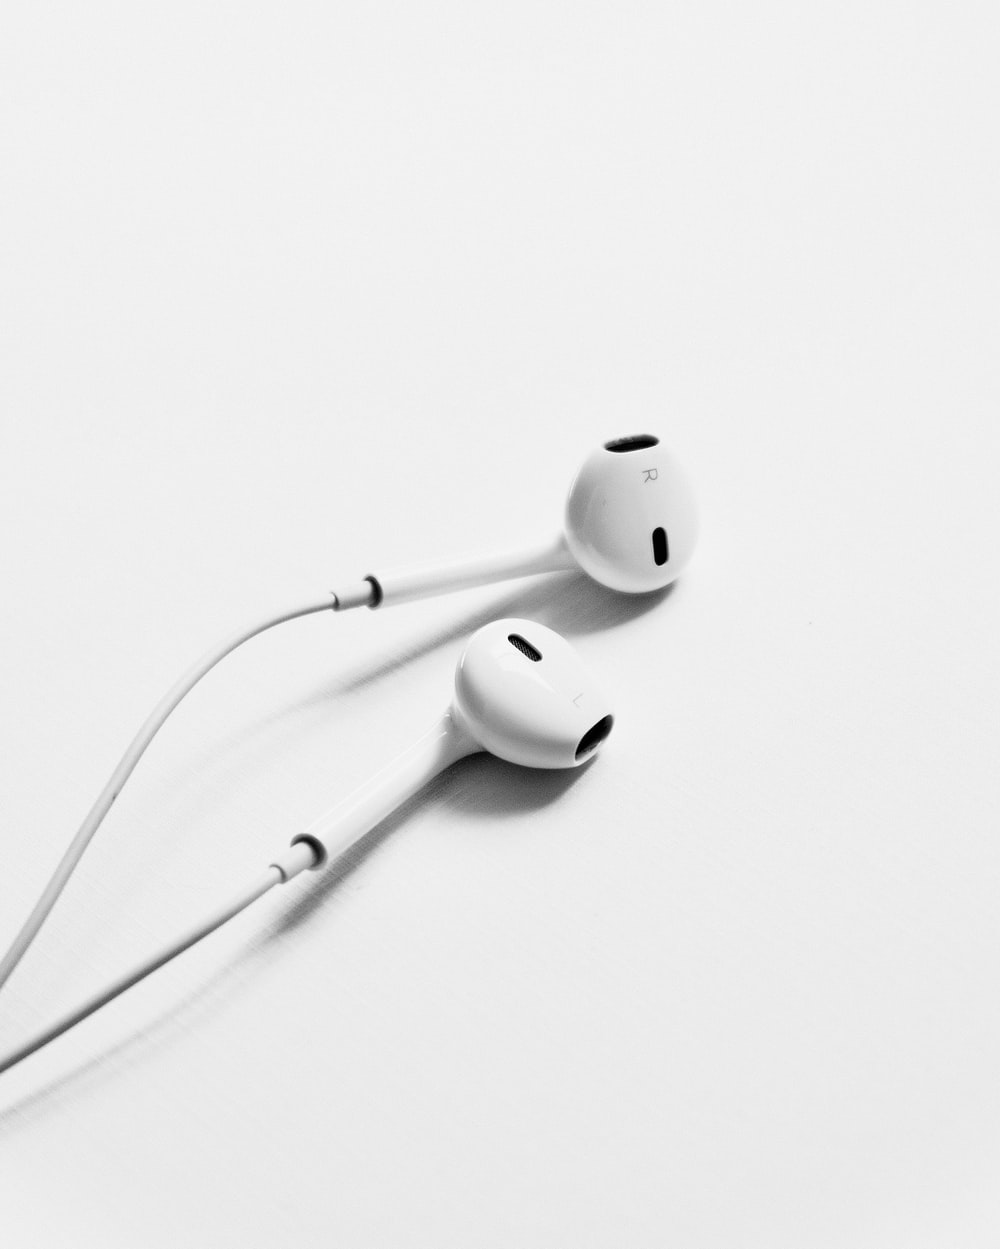 apple earpods on white surface photo